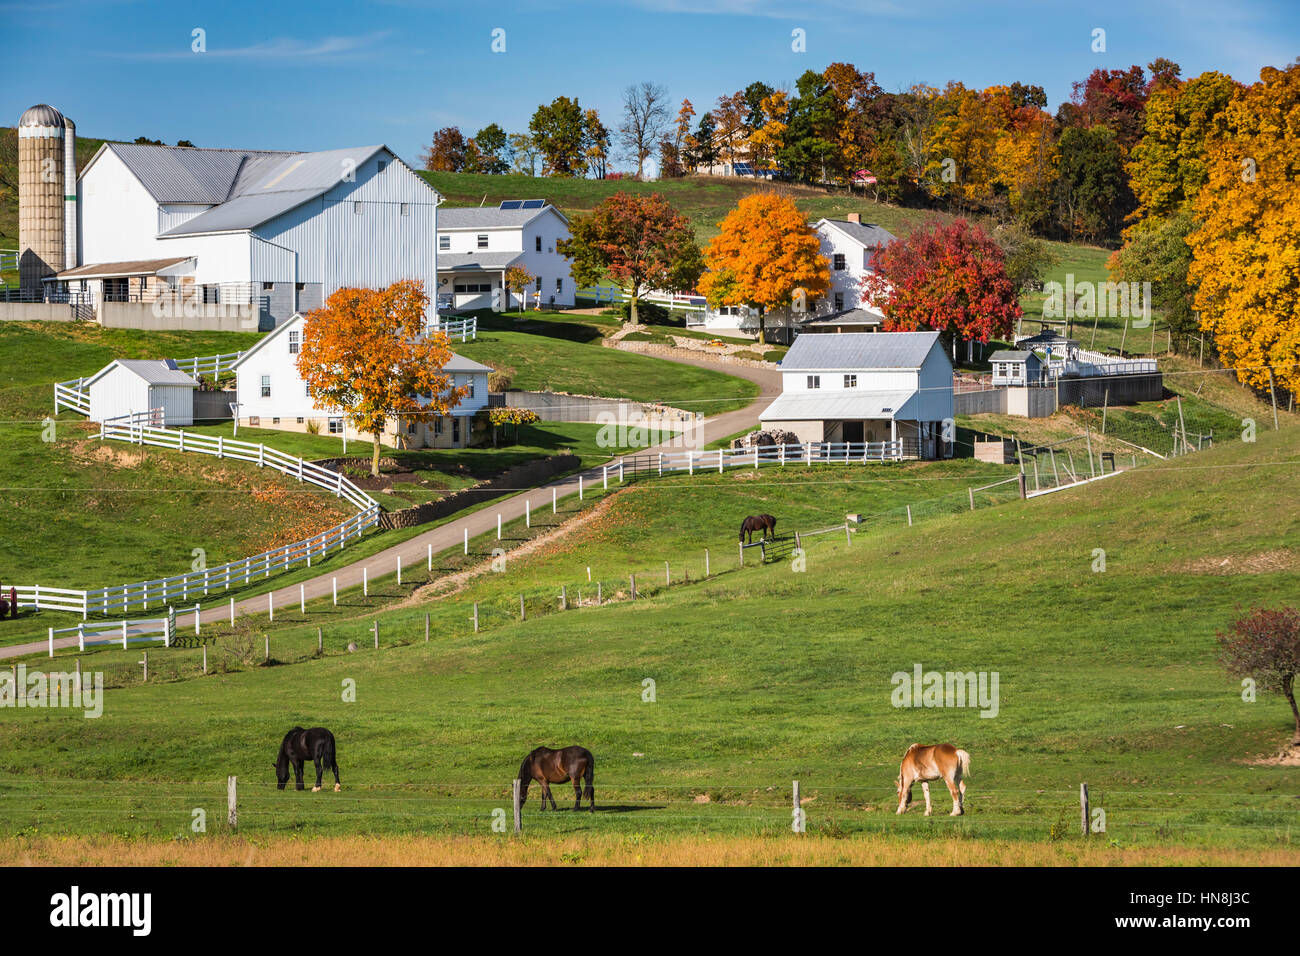 An Amish farm with house, barn and horses near Charm, Ohio, USA. Stock Photo